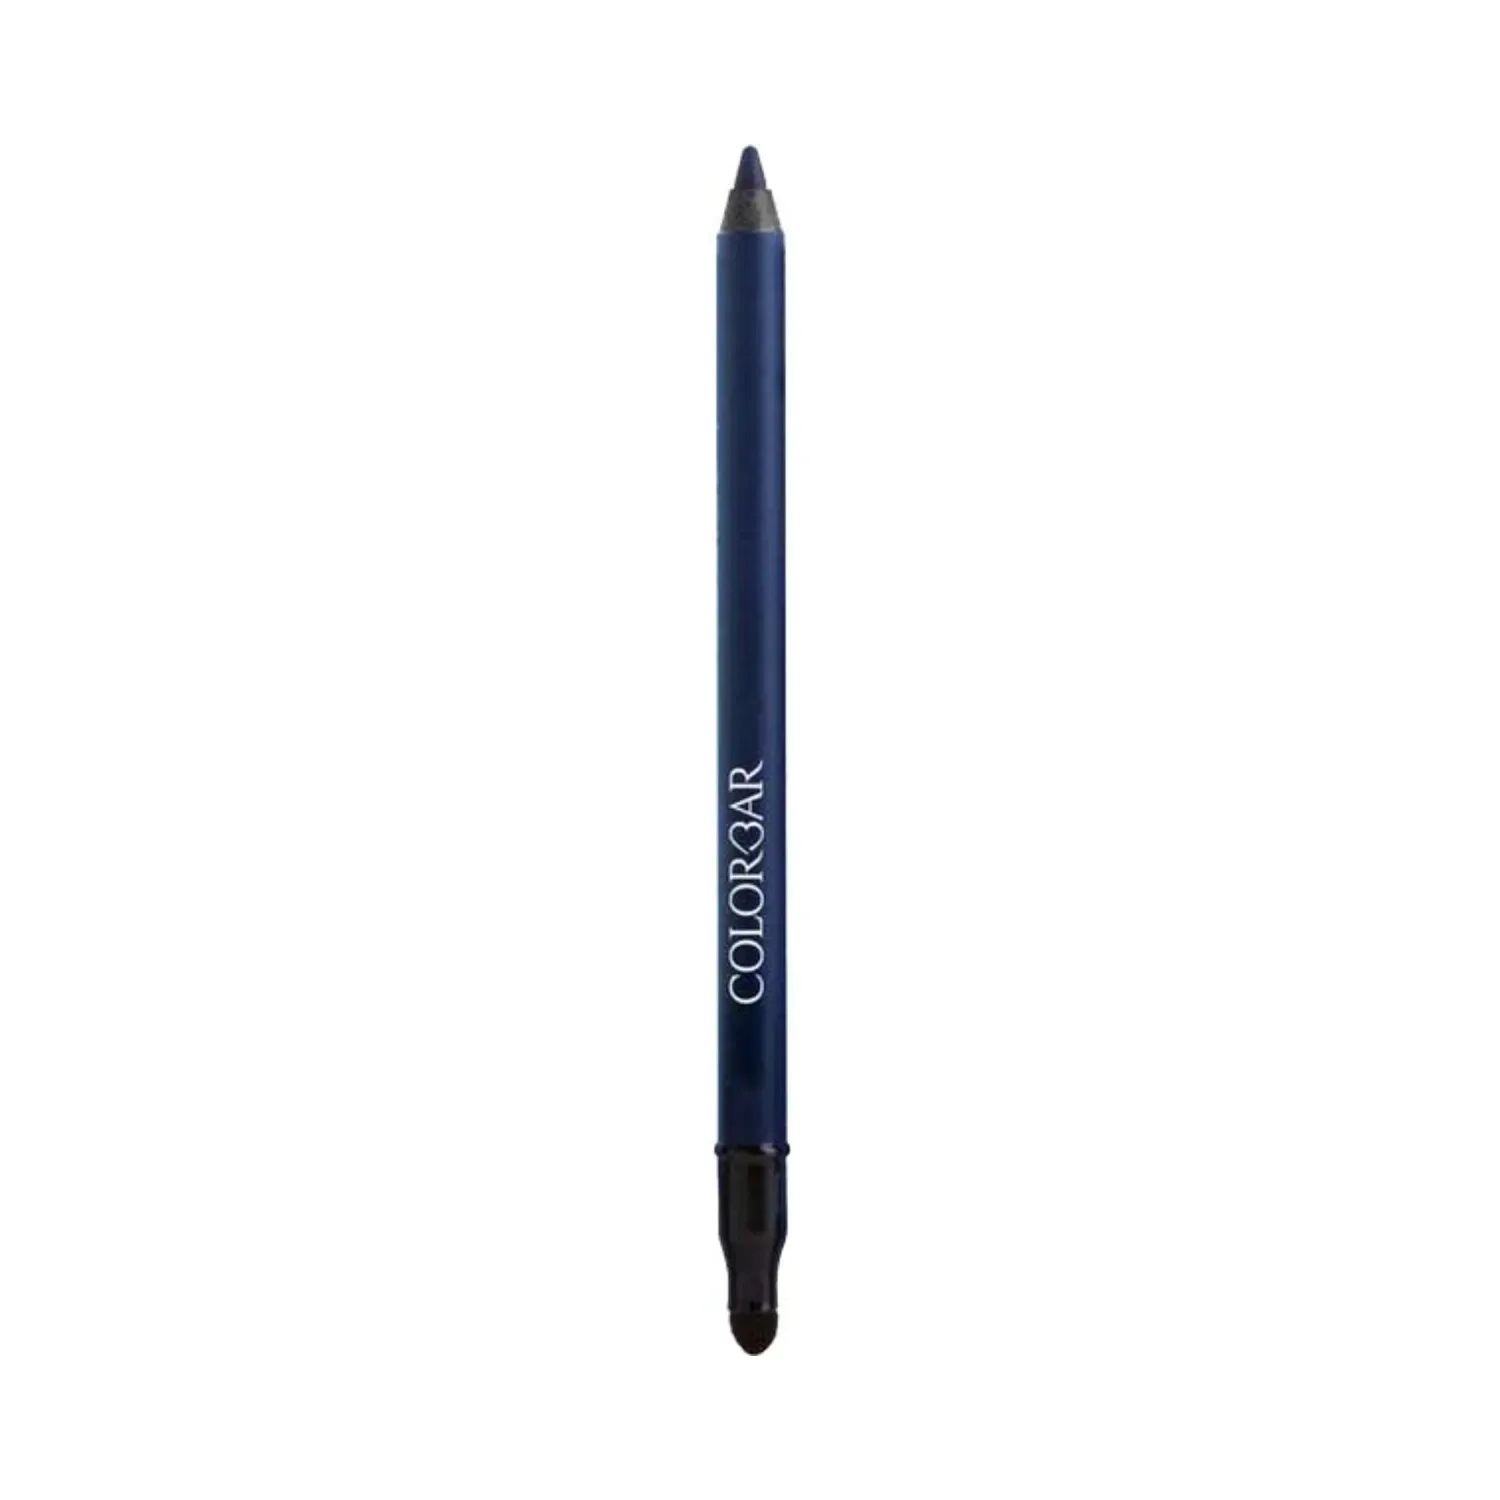 Colorbar | Colorbar Just Smoky Eye Pencil - 007 Just Electra (1.2g)